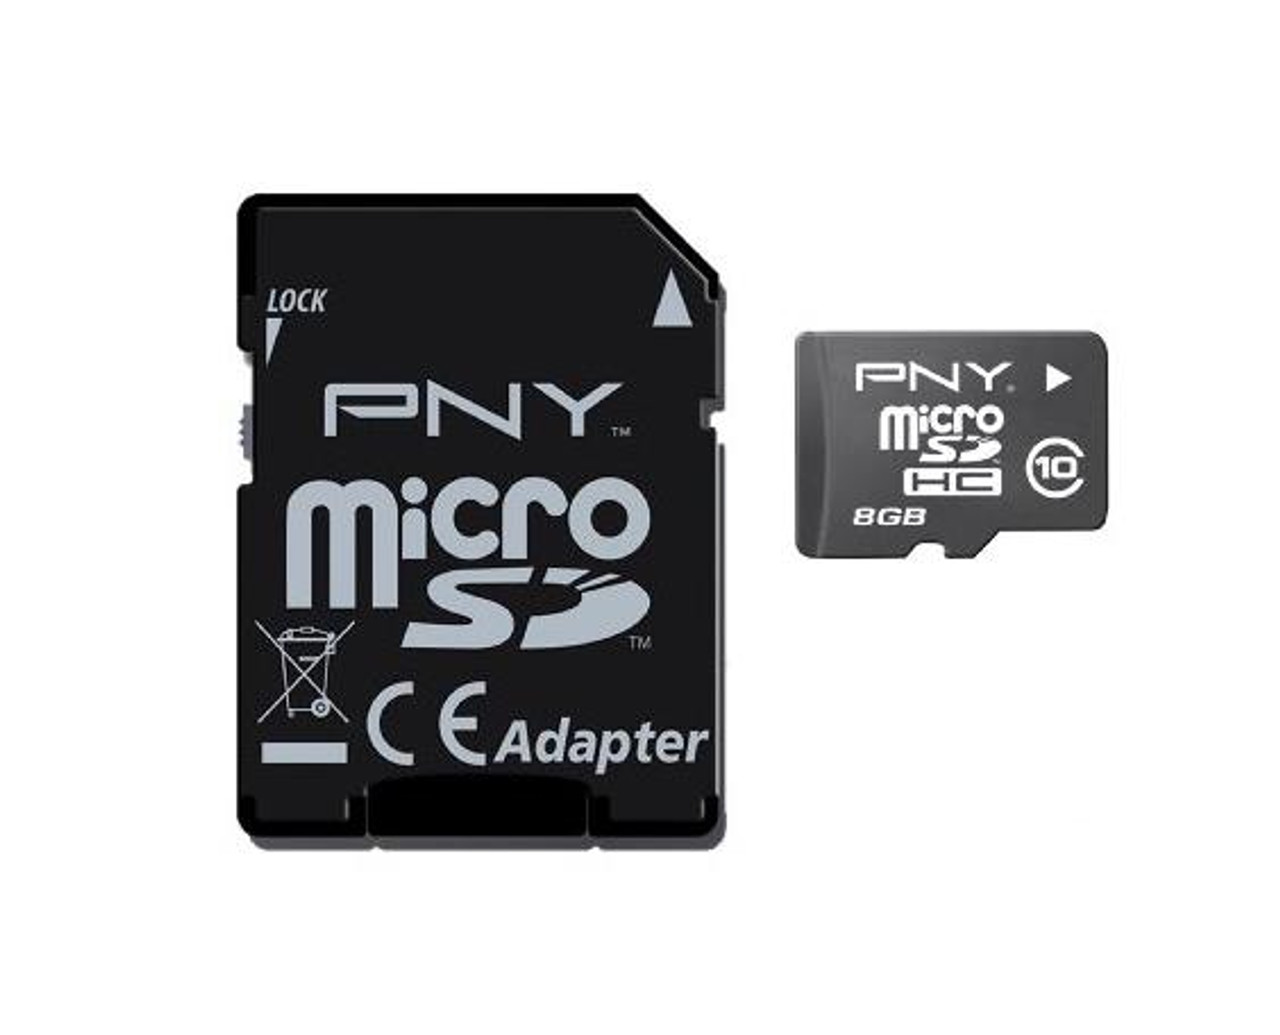 Карта памяти 4. Карта памяти PNY MICROSDHC class 4 16gb + SD Adapter. Карта памяти PNY MICROSDHC class 10 16gb + SD Adapter. Карта памяти PNY Micro secure Digital 2gb. Карта памяти PNY Micro secure Digital 3in1 2gb.